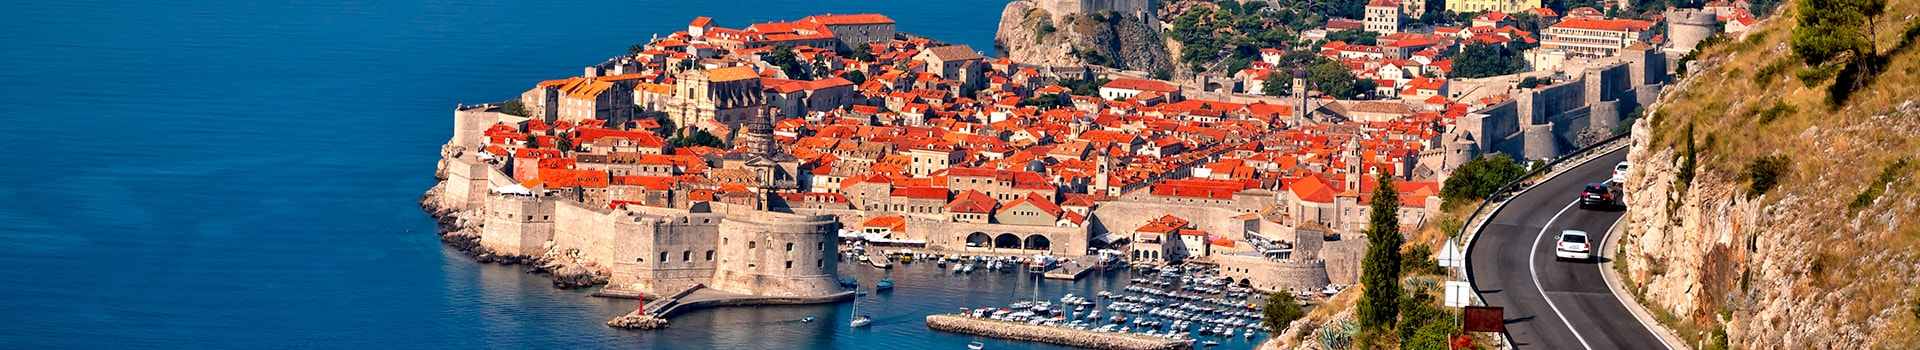 Malaga - Dubrovnik